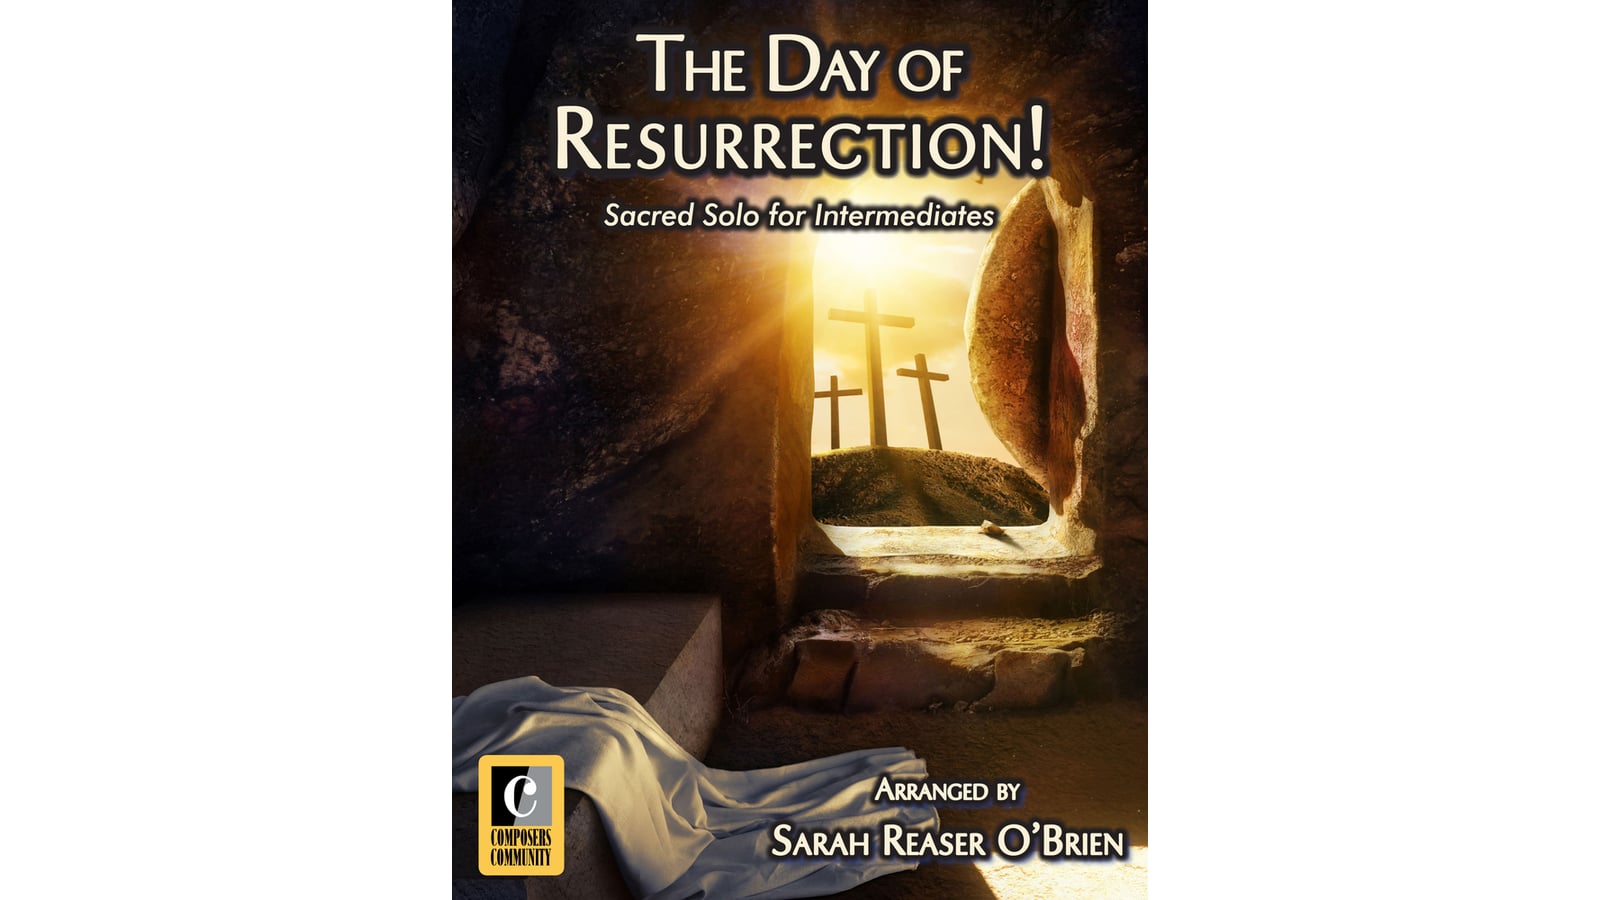 Every Resurrection Showcase